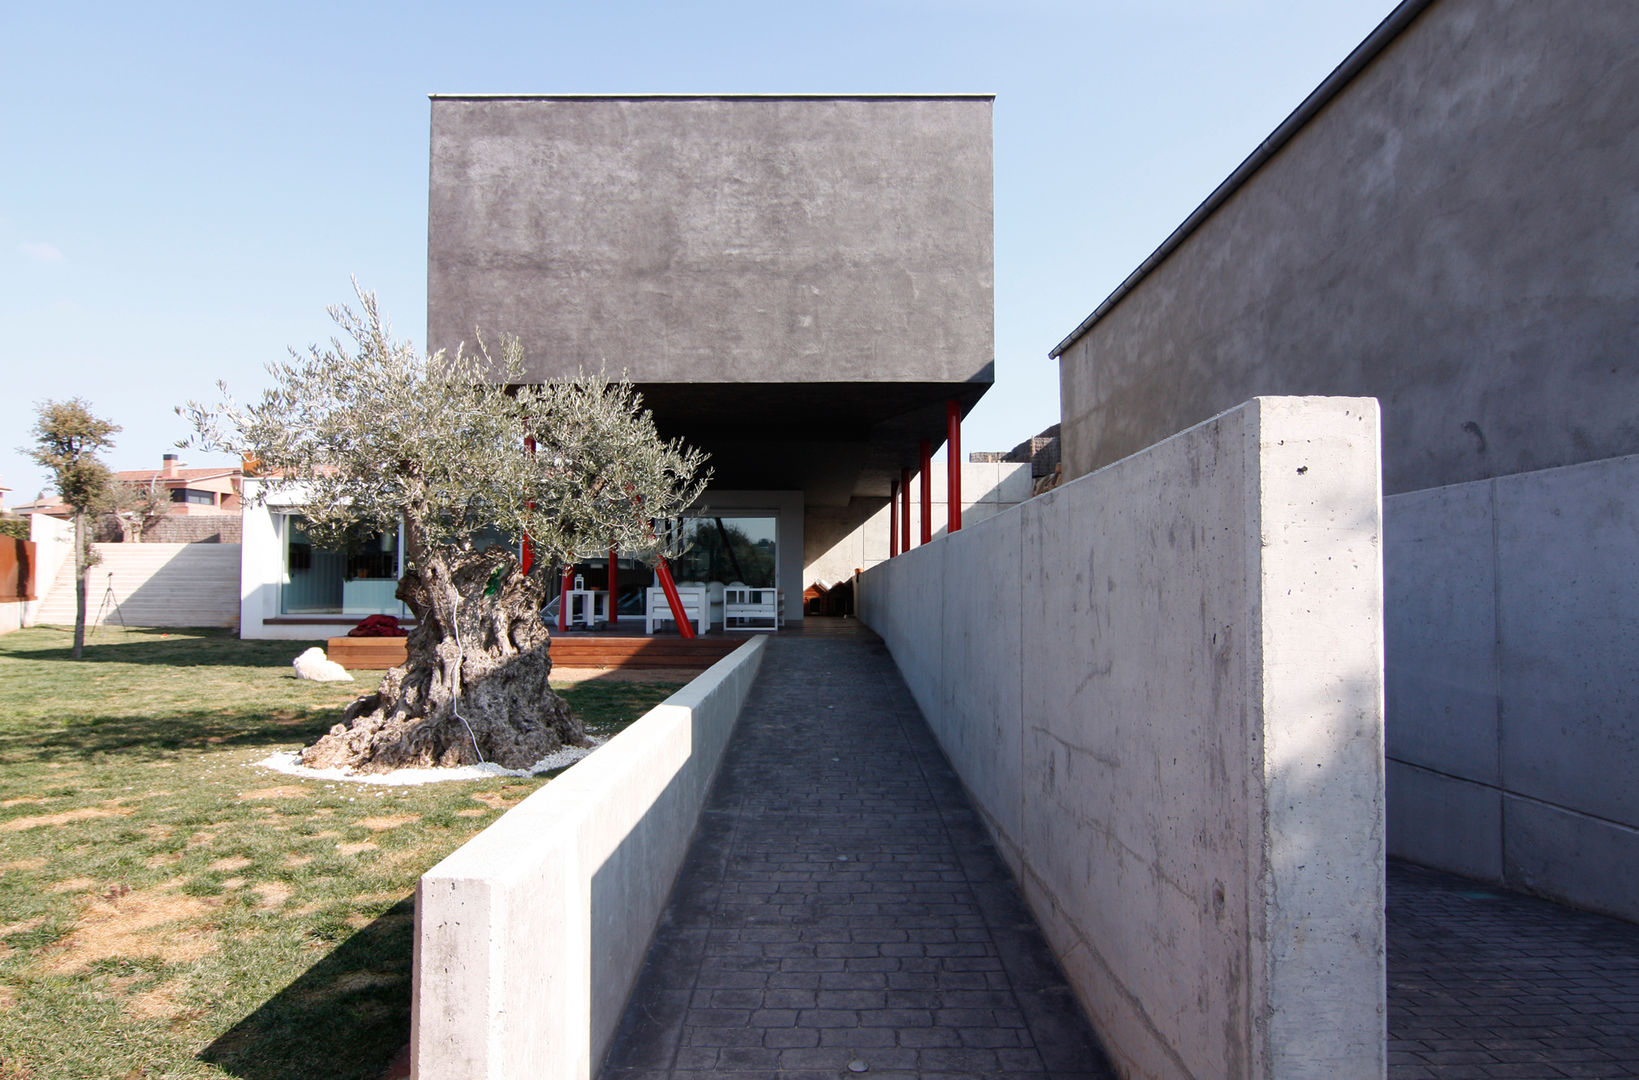 Vivienda unifamiliar en Navàs. Rampa de acceso peatonal eidée arquitectes S.L.P. Casas de estilo minimalista